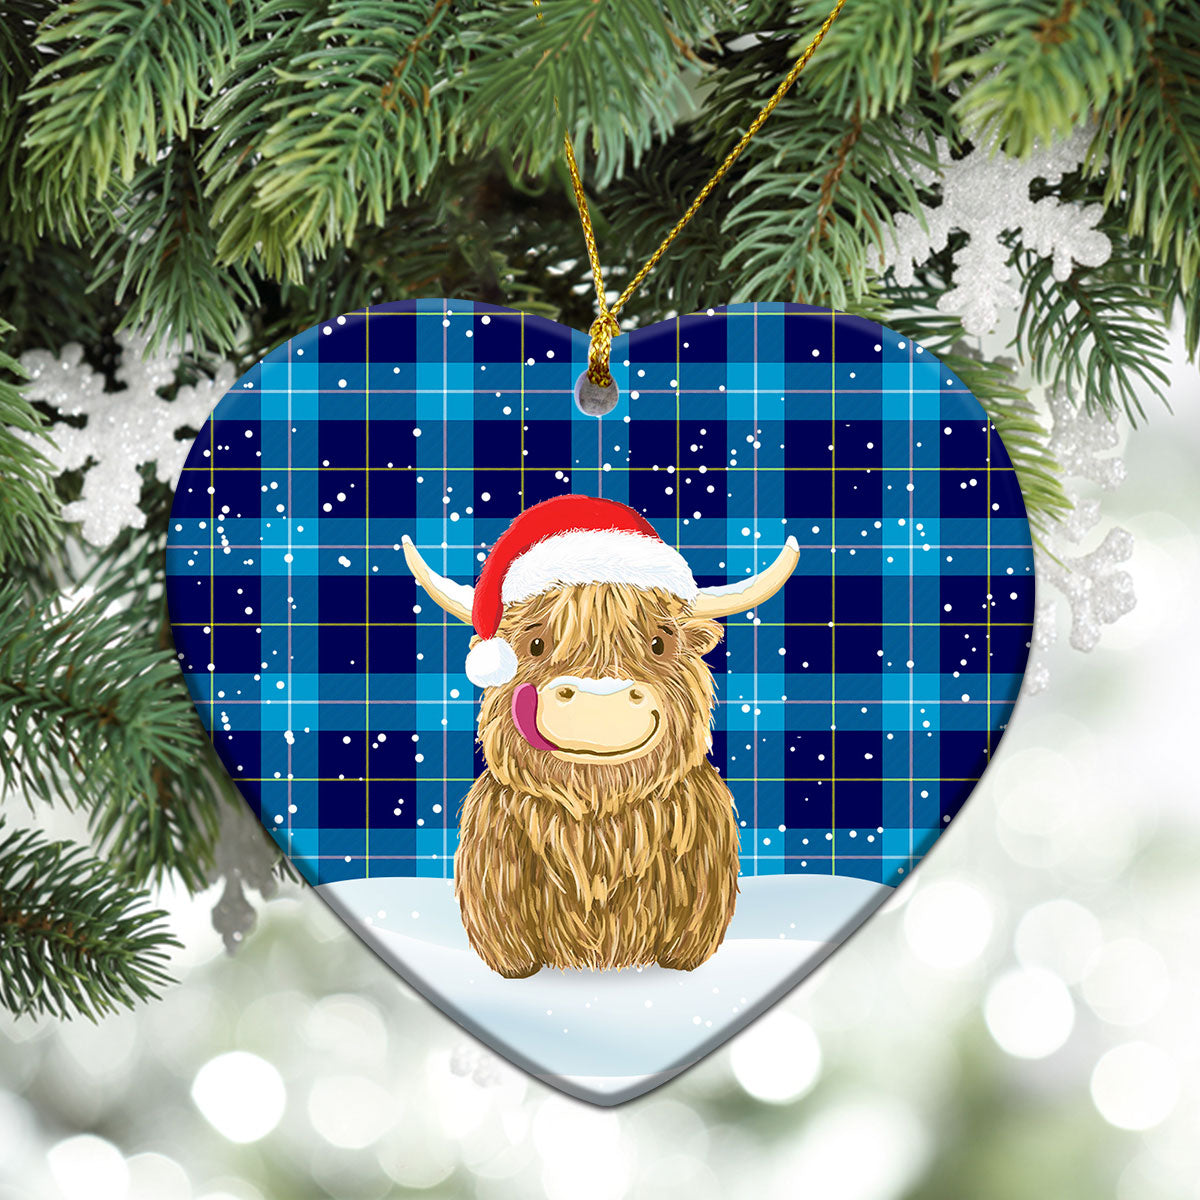 McKerrell Tartan Christmas Ceramic Ornament - Highland Cows Style